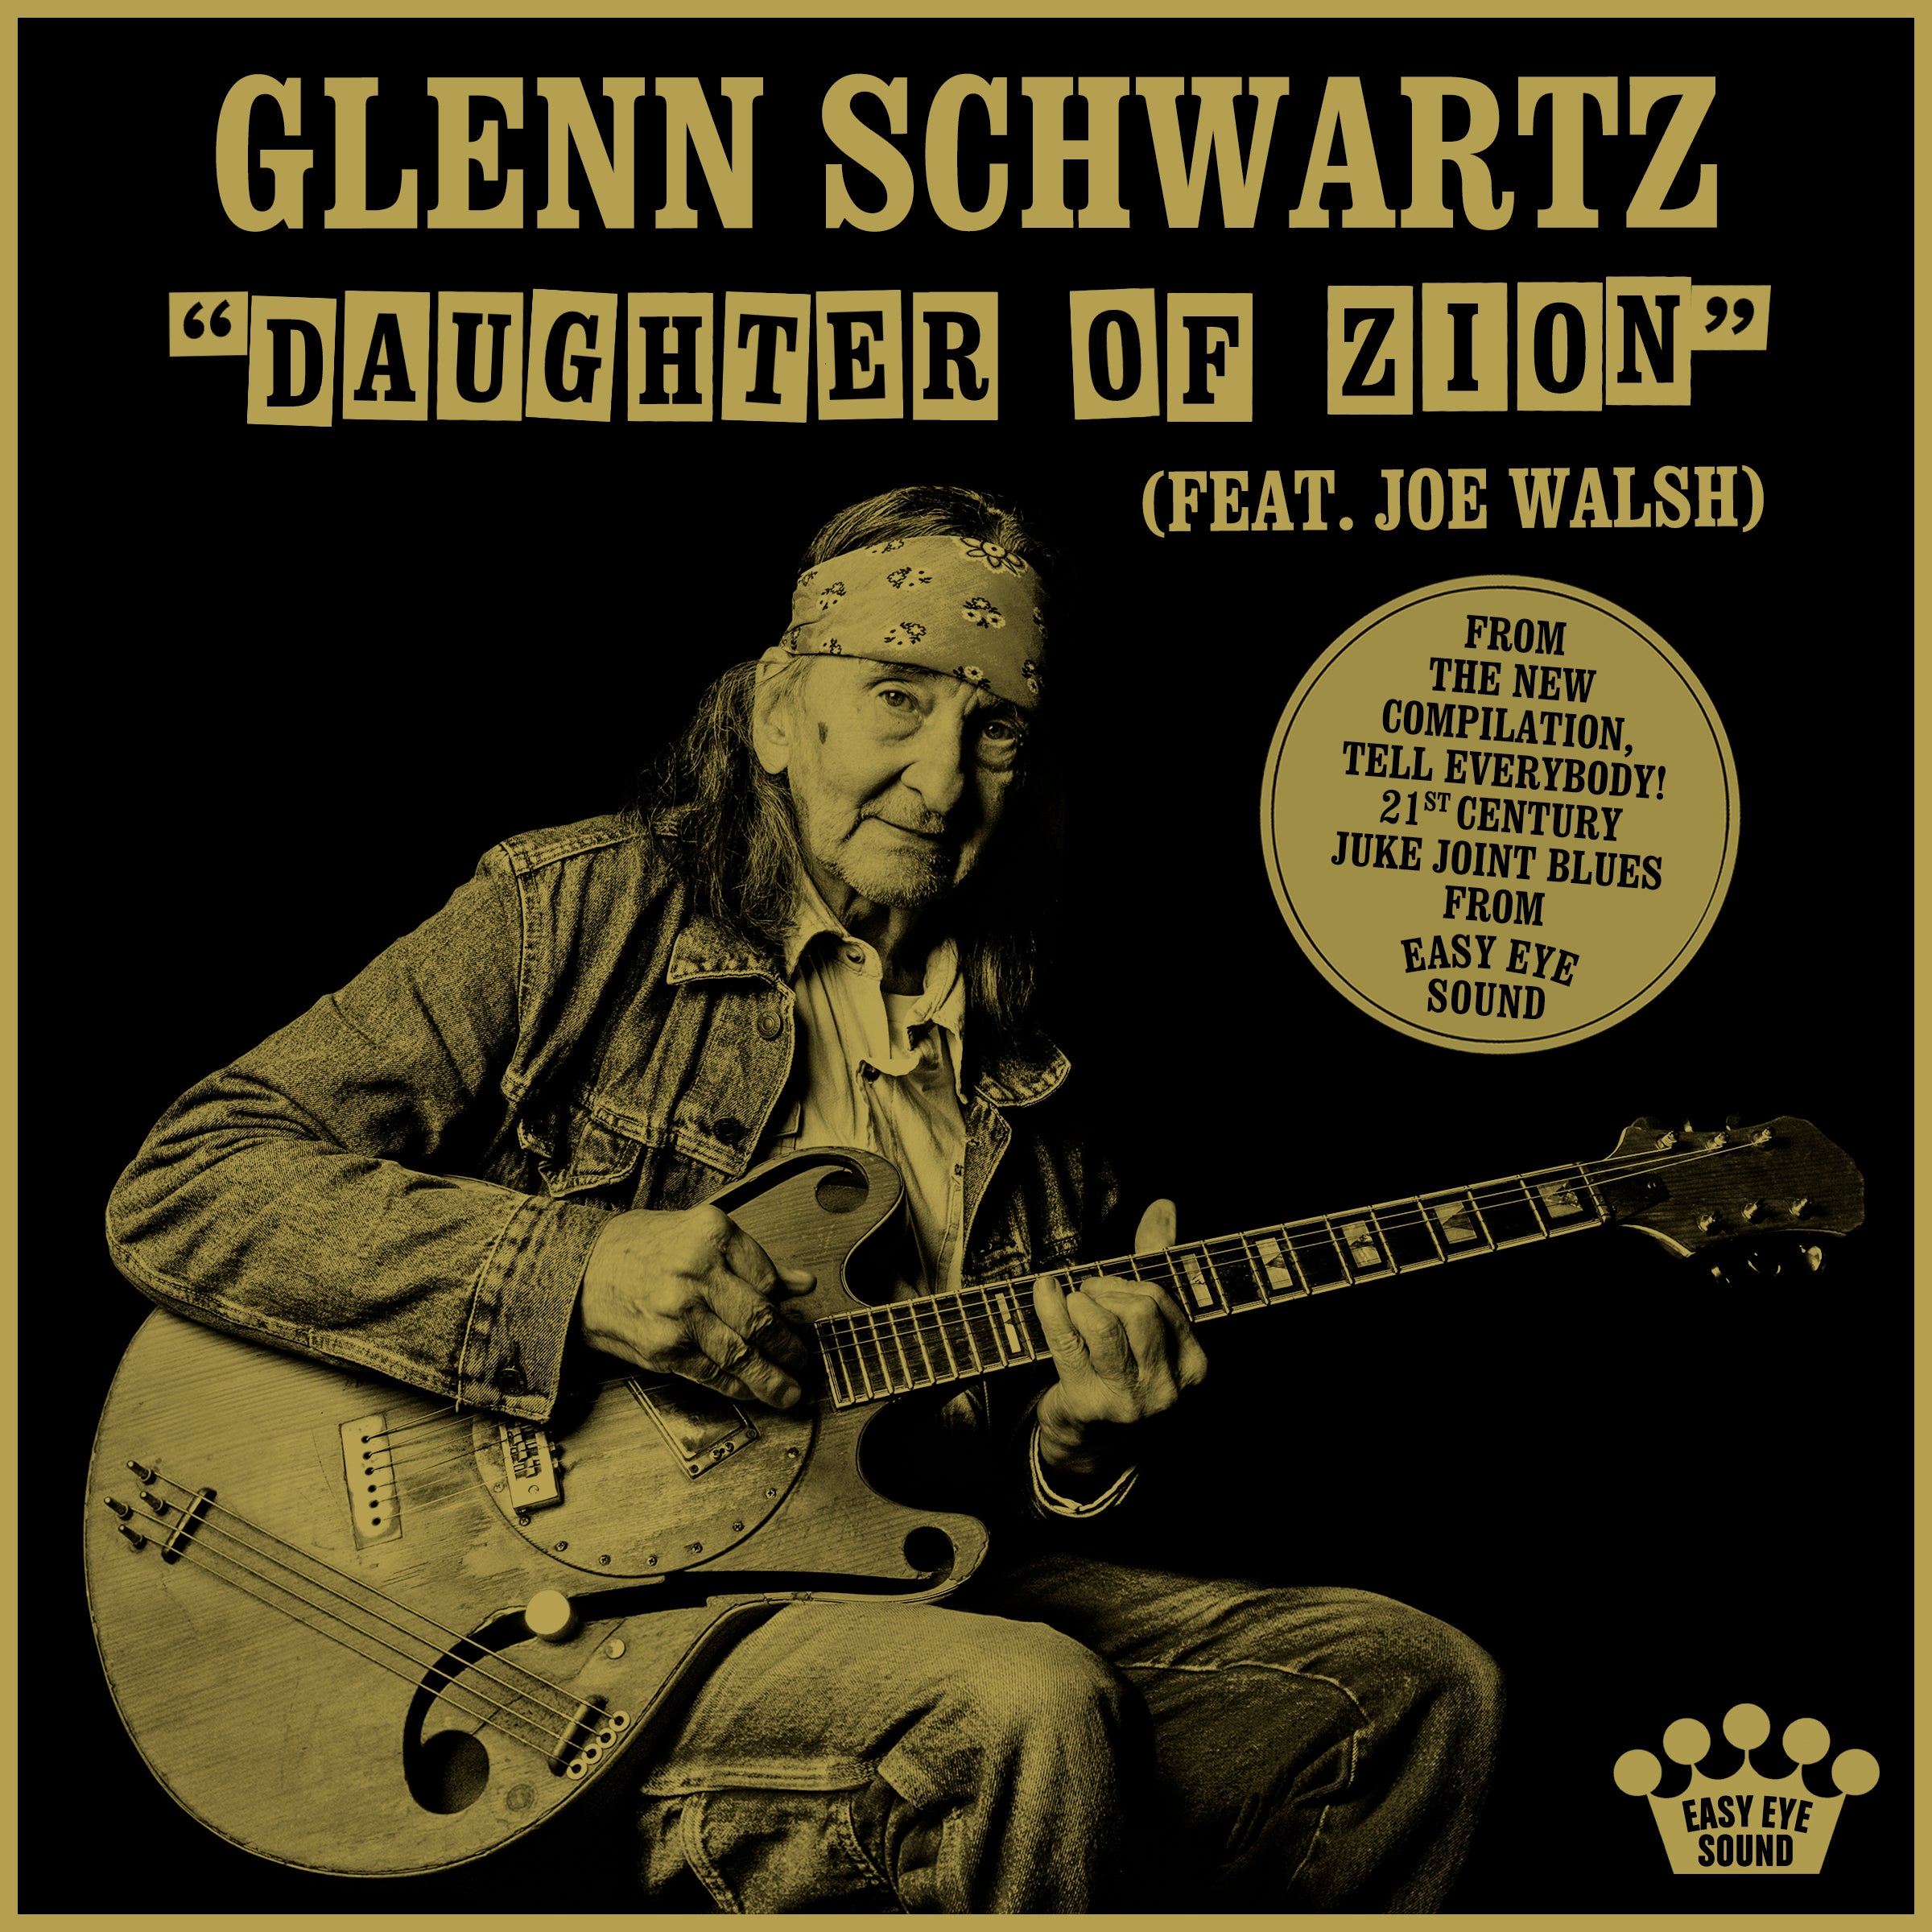 Listen to "Daughter of Zion" by Glenn Schwartz featuring Joe Walsh now!